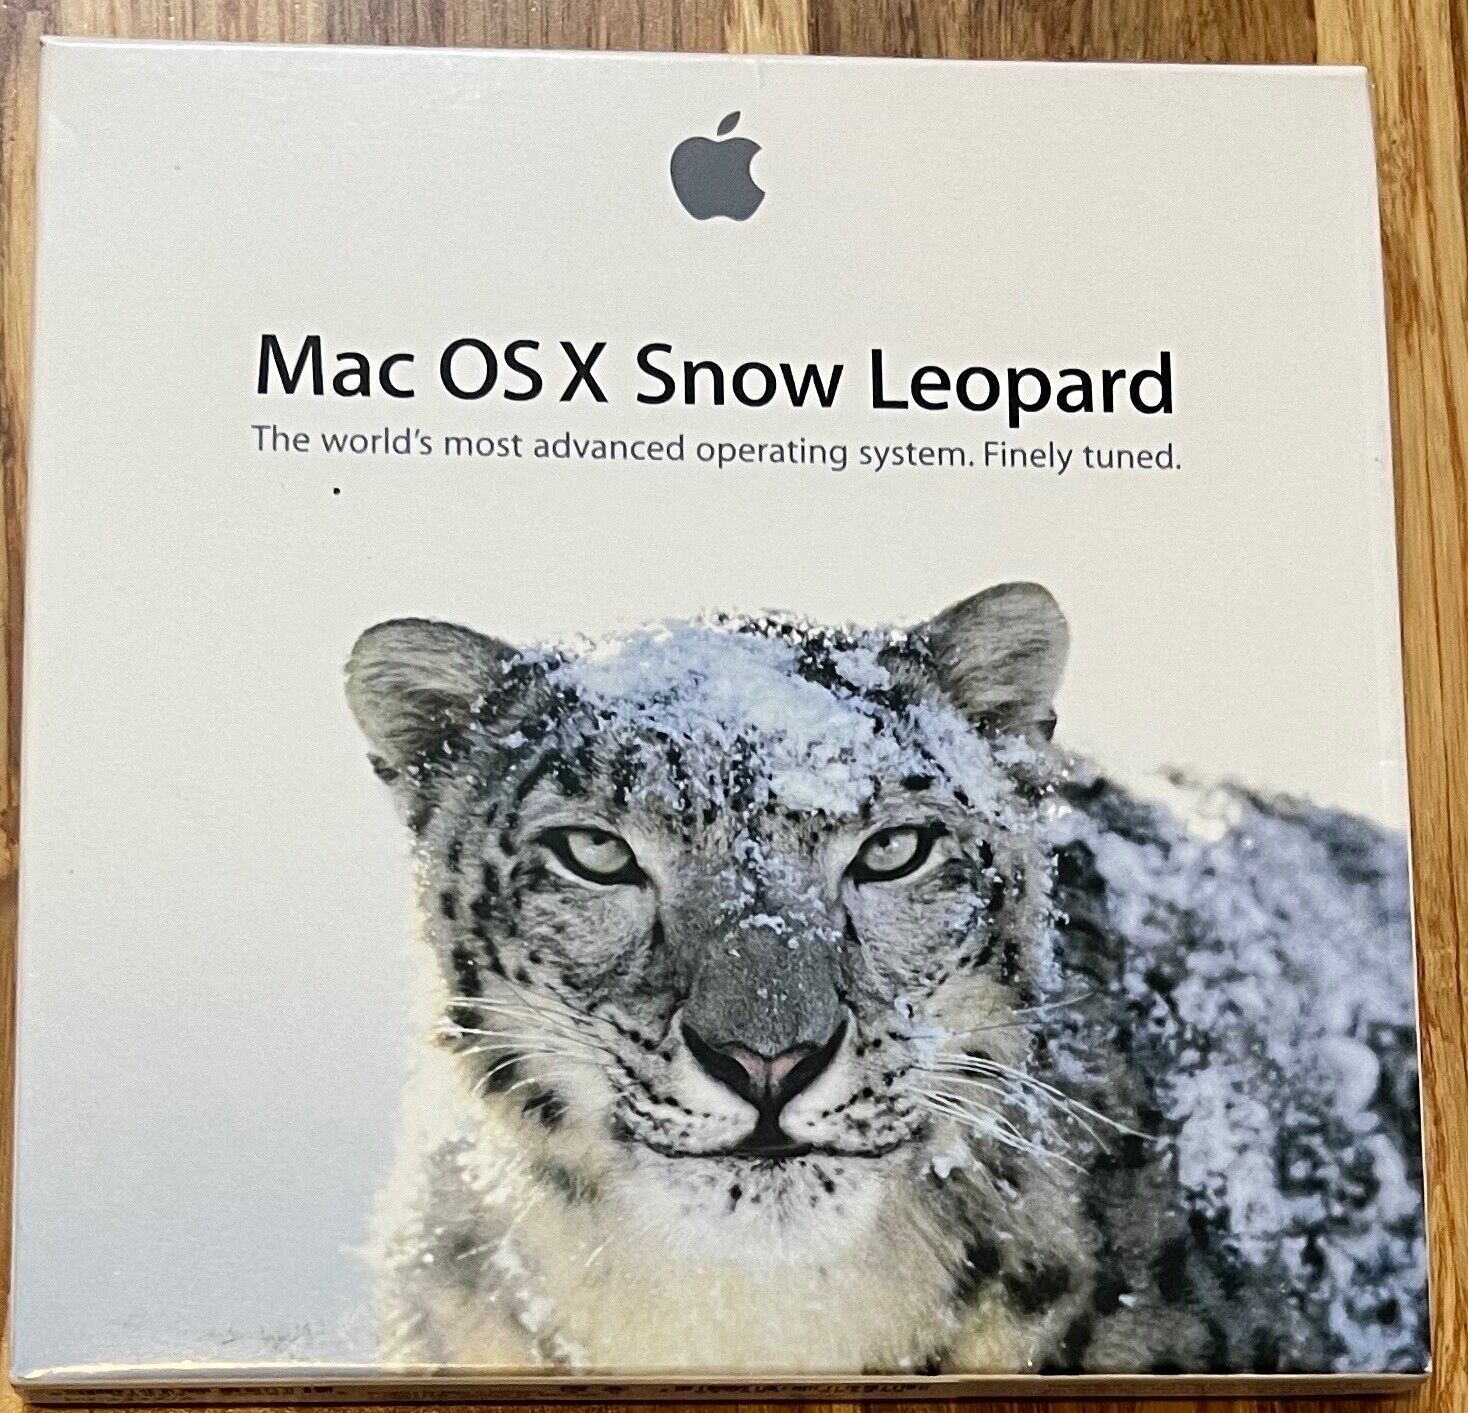 Mac OS X Snow Leopard 10.6